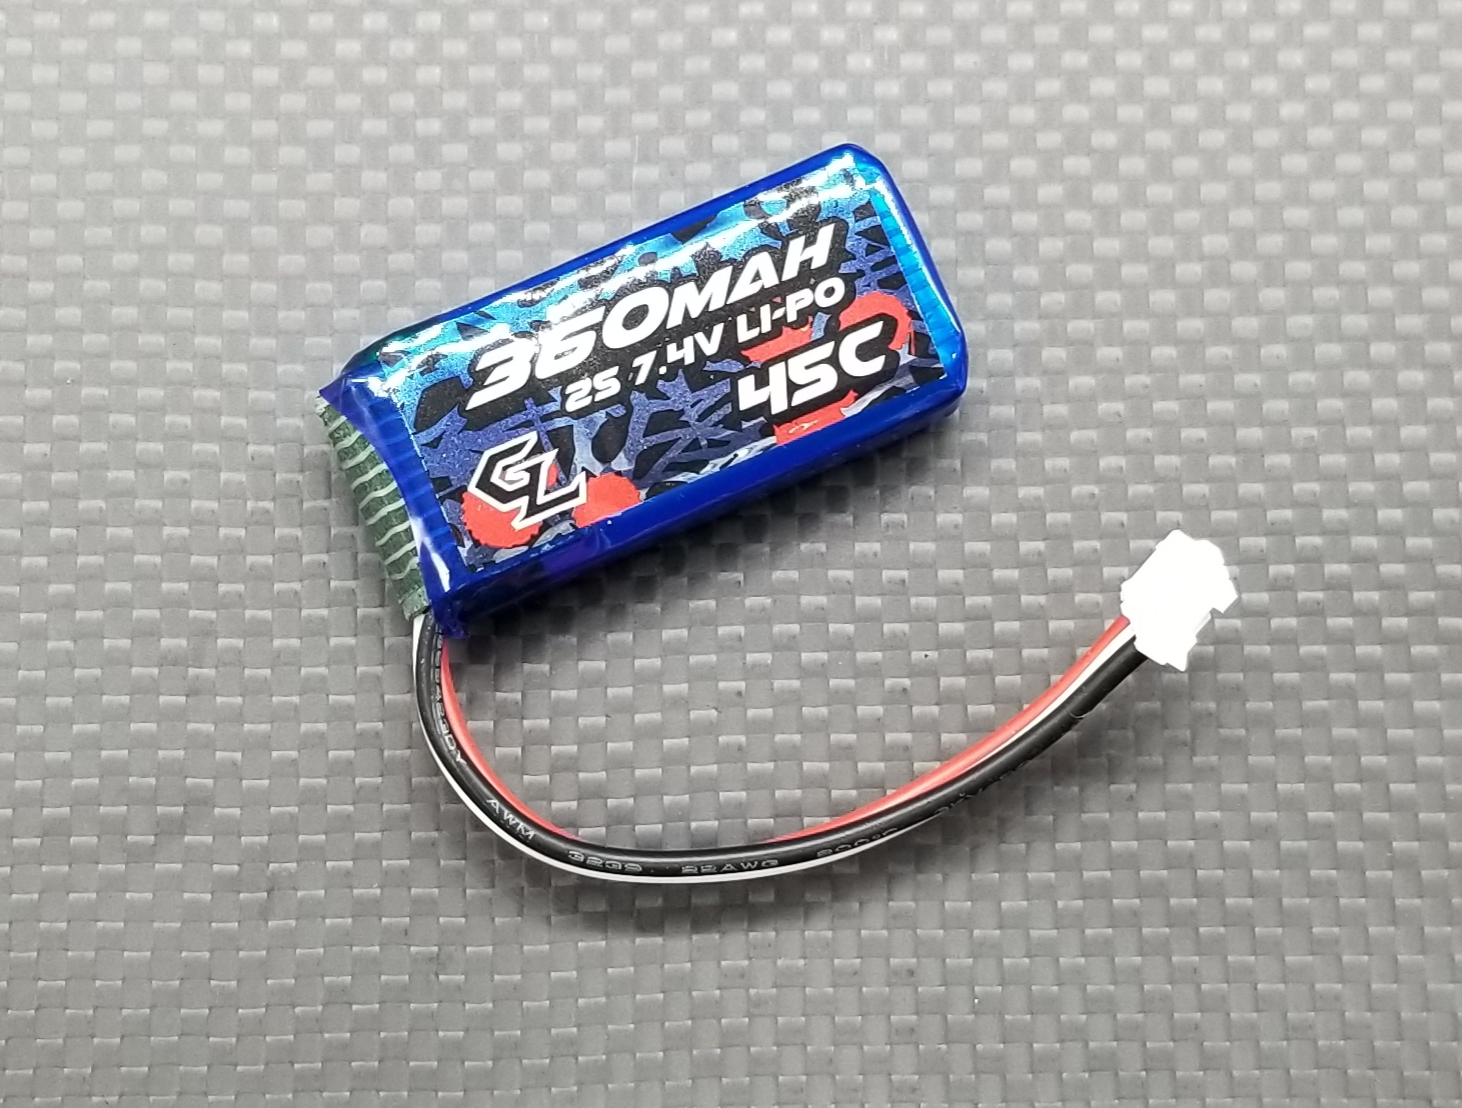 GL Racing 2S 360mAh Lipo Battery Pack